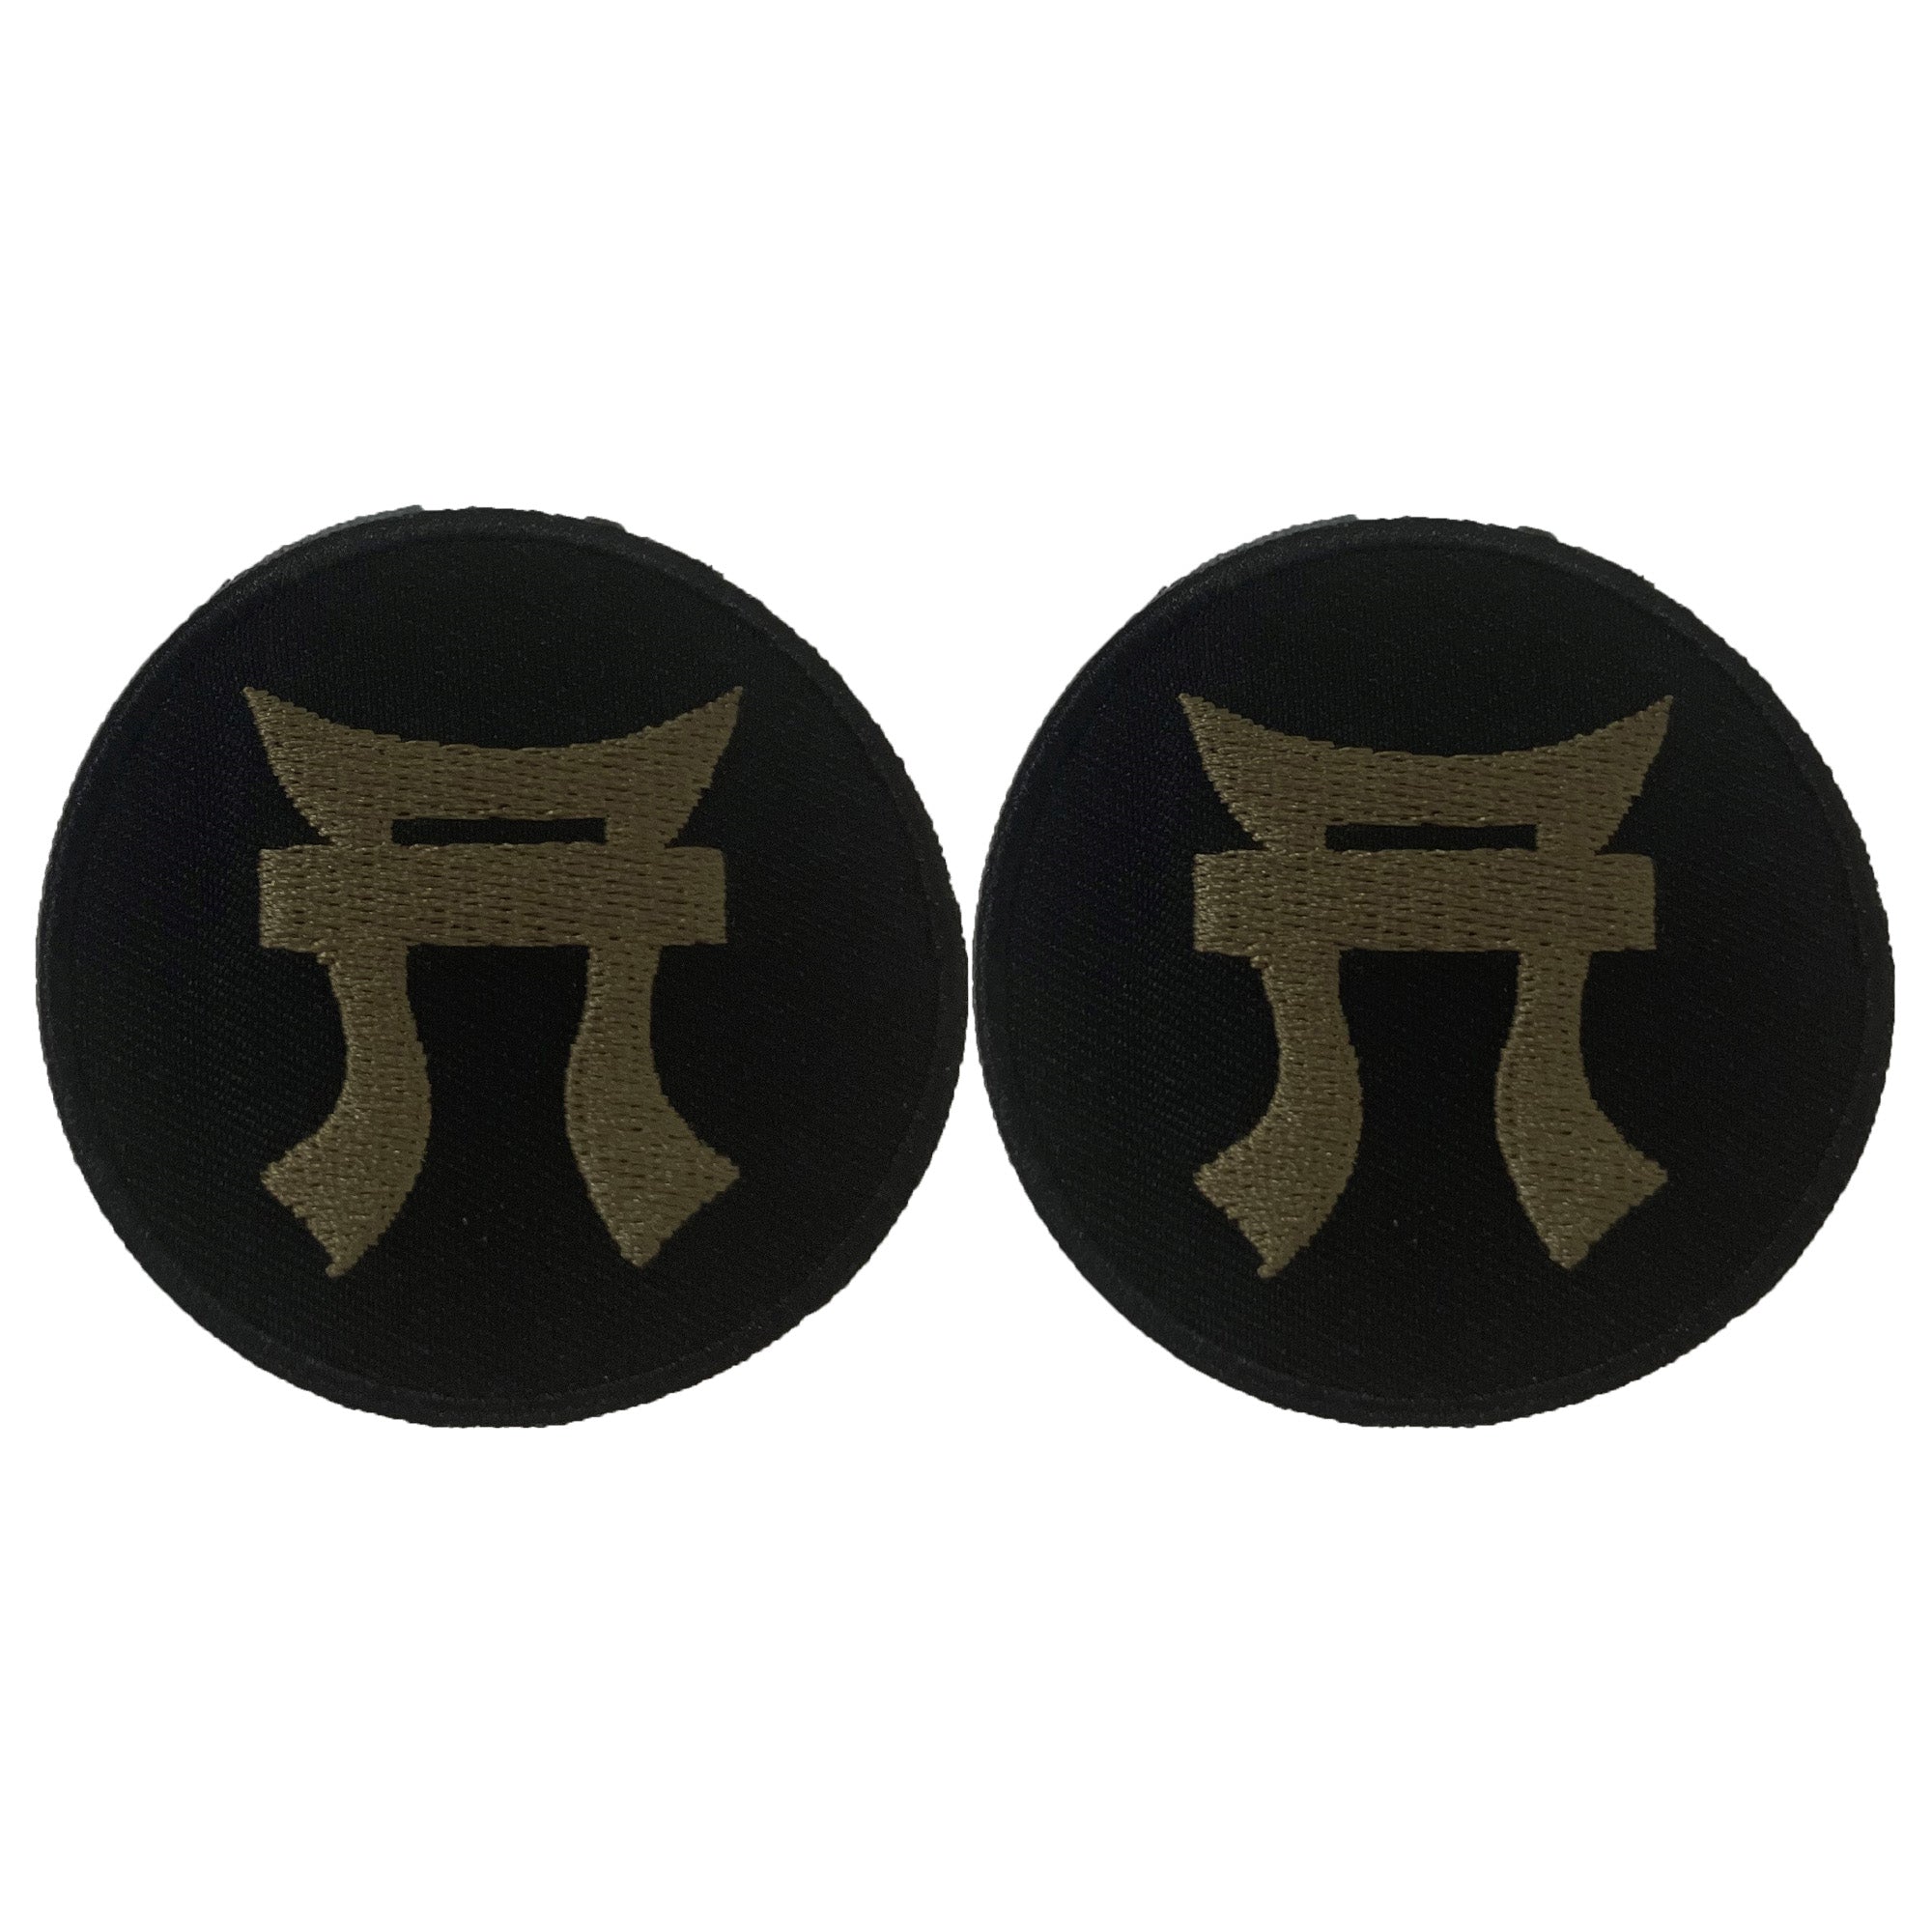 187th Rakkasan Round OCP Helmet Patch (pair) - Insignia Depot